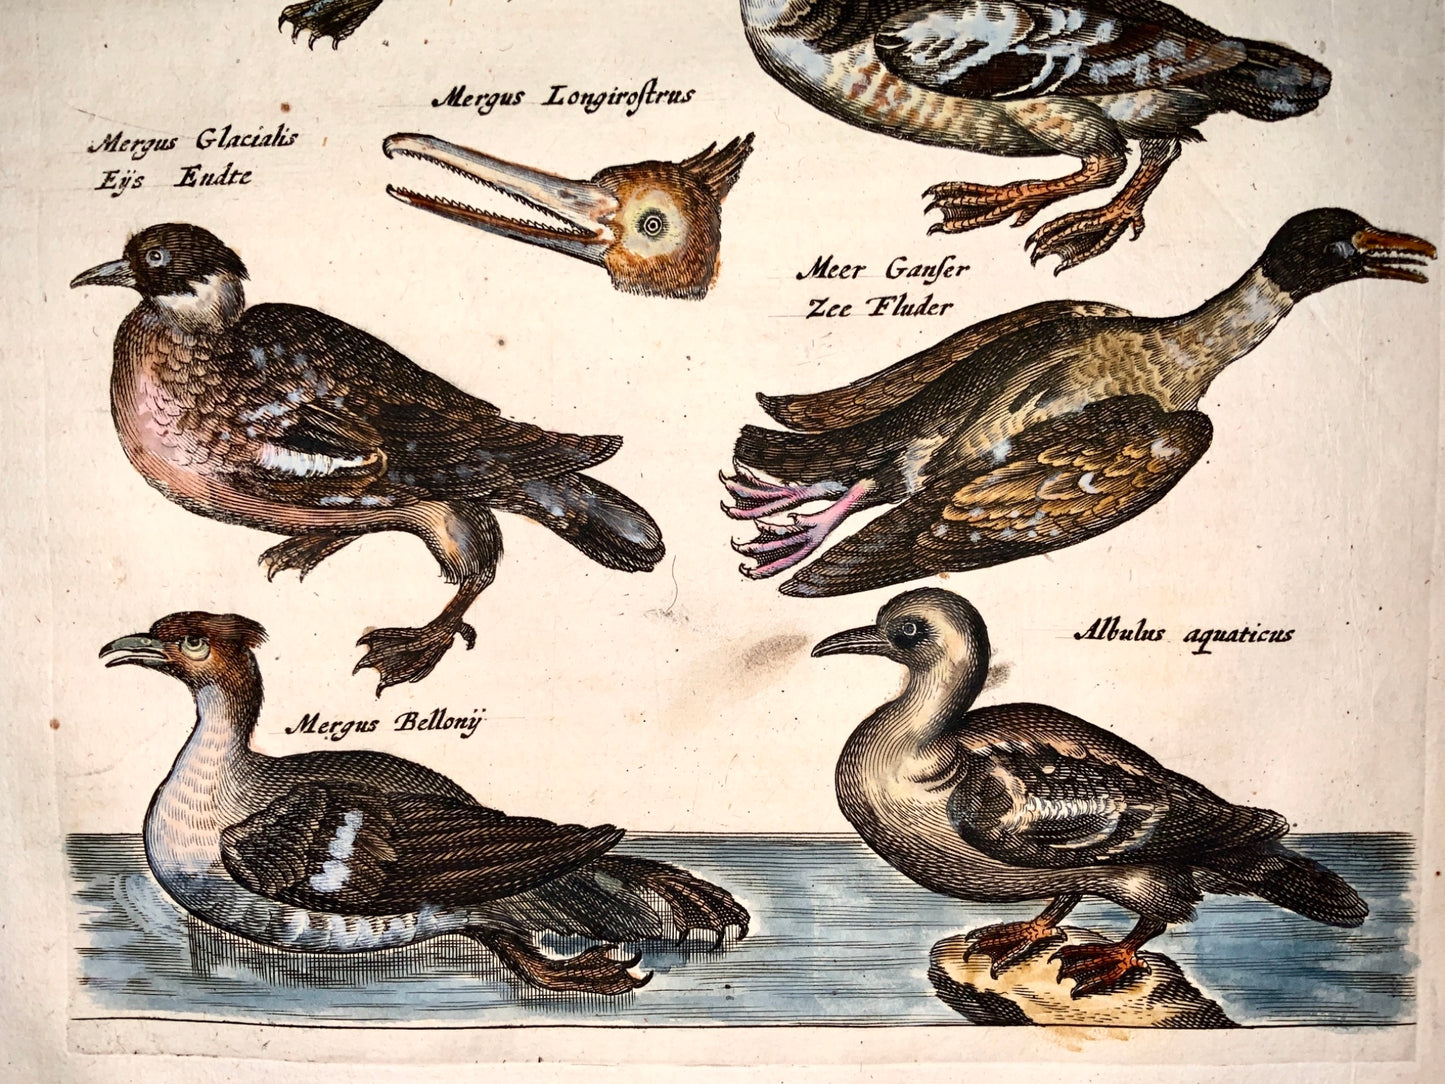 1657 Ducks and Geese - Matt. MERIAN - Folio hand coloured engraving